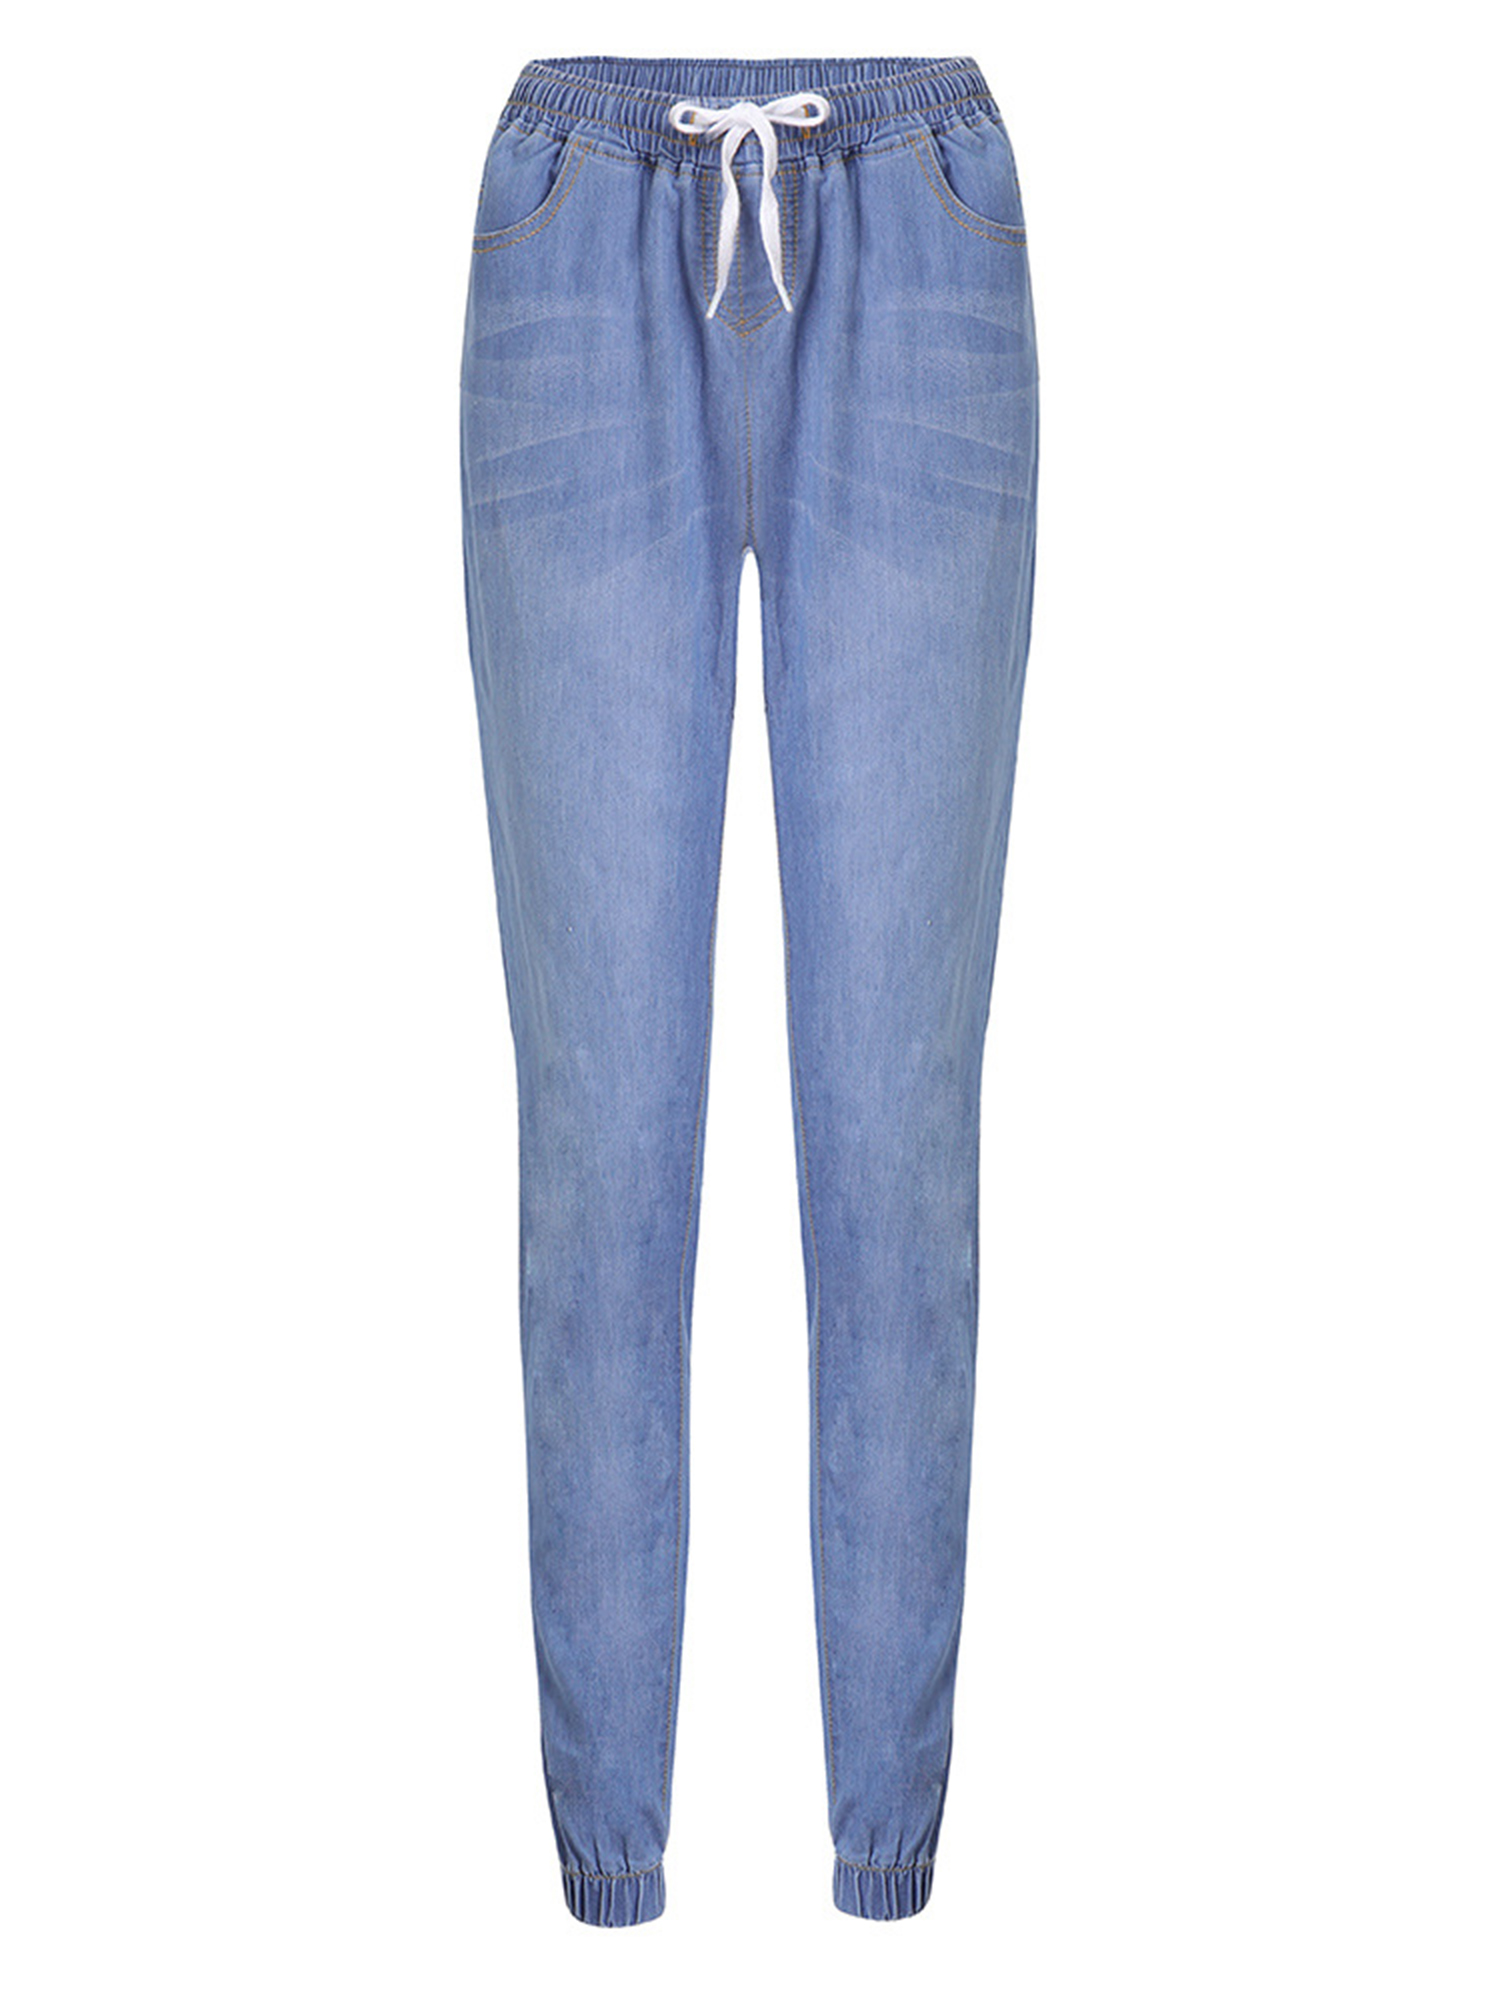 Plus Size Jeans for Women Mid Rise Slim Fit Joggers Denim Pants Casual Jeggings Drawstring Stretch Pants S-5XL Light Blue 2XL - image 1 of 2